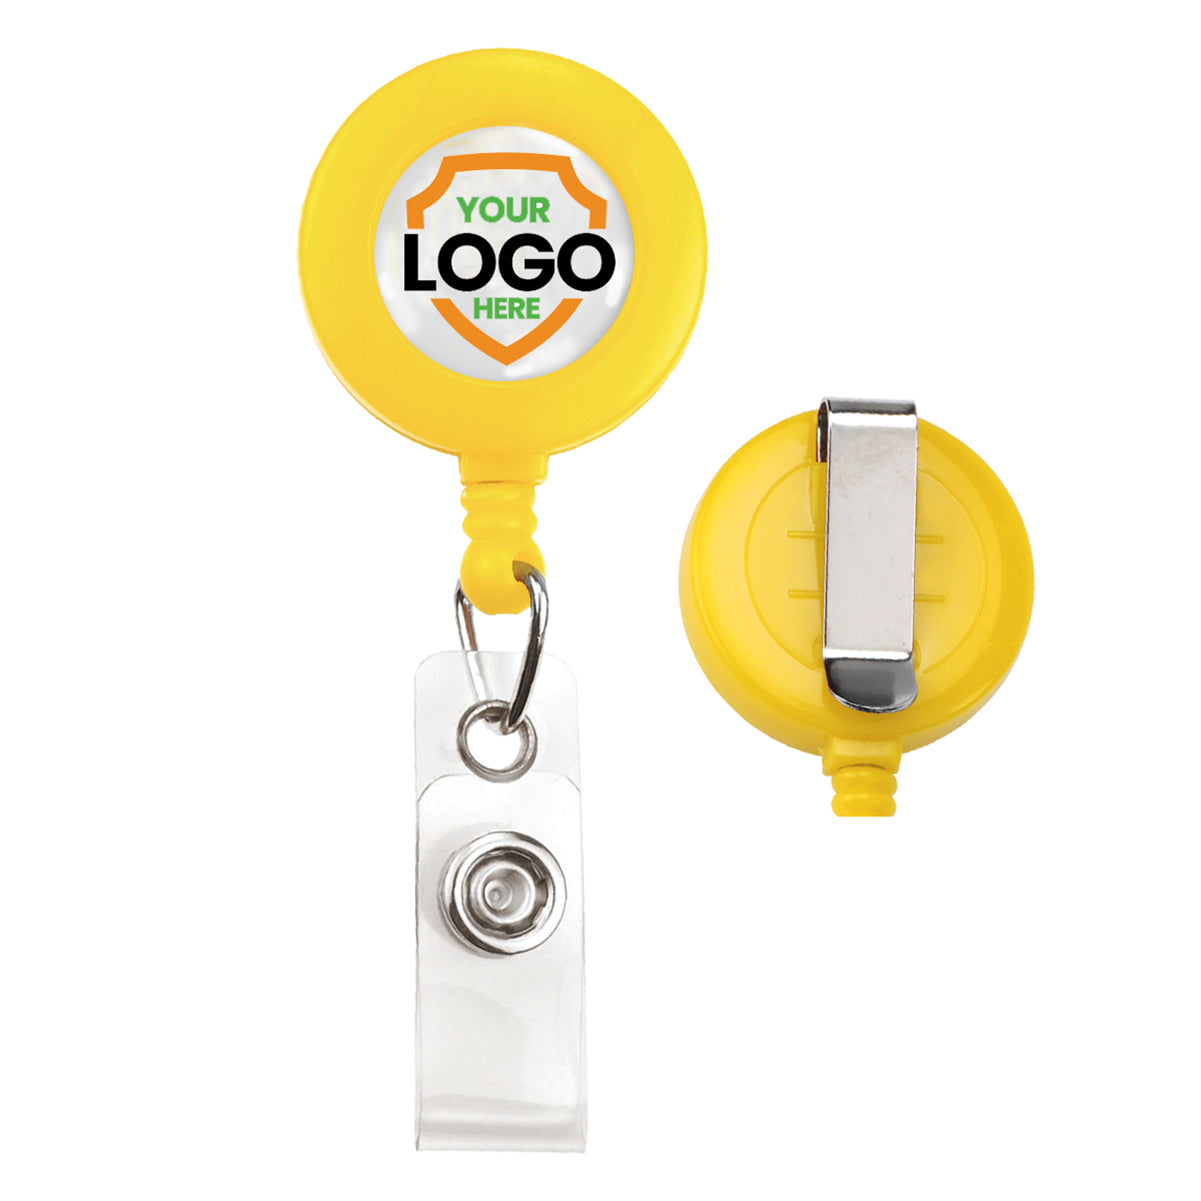 customizable badge reels - standard retractable custom badge reels for business branding 2120-303X